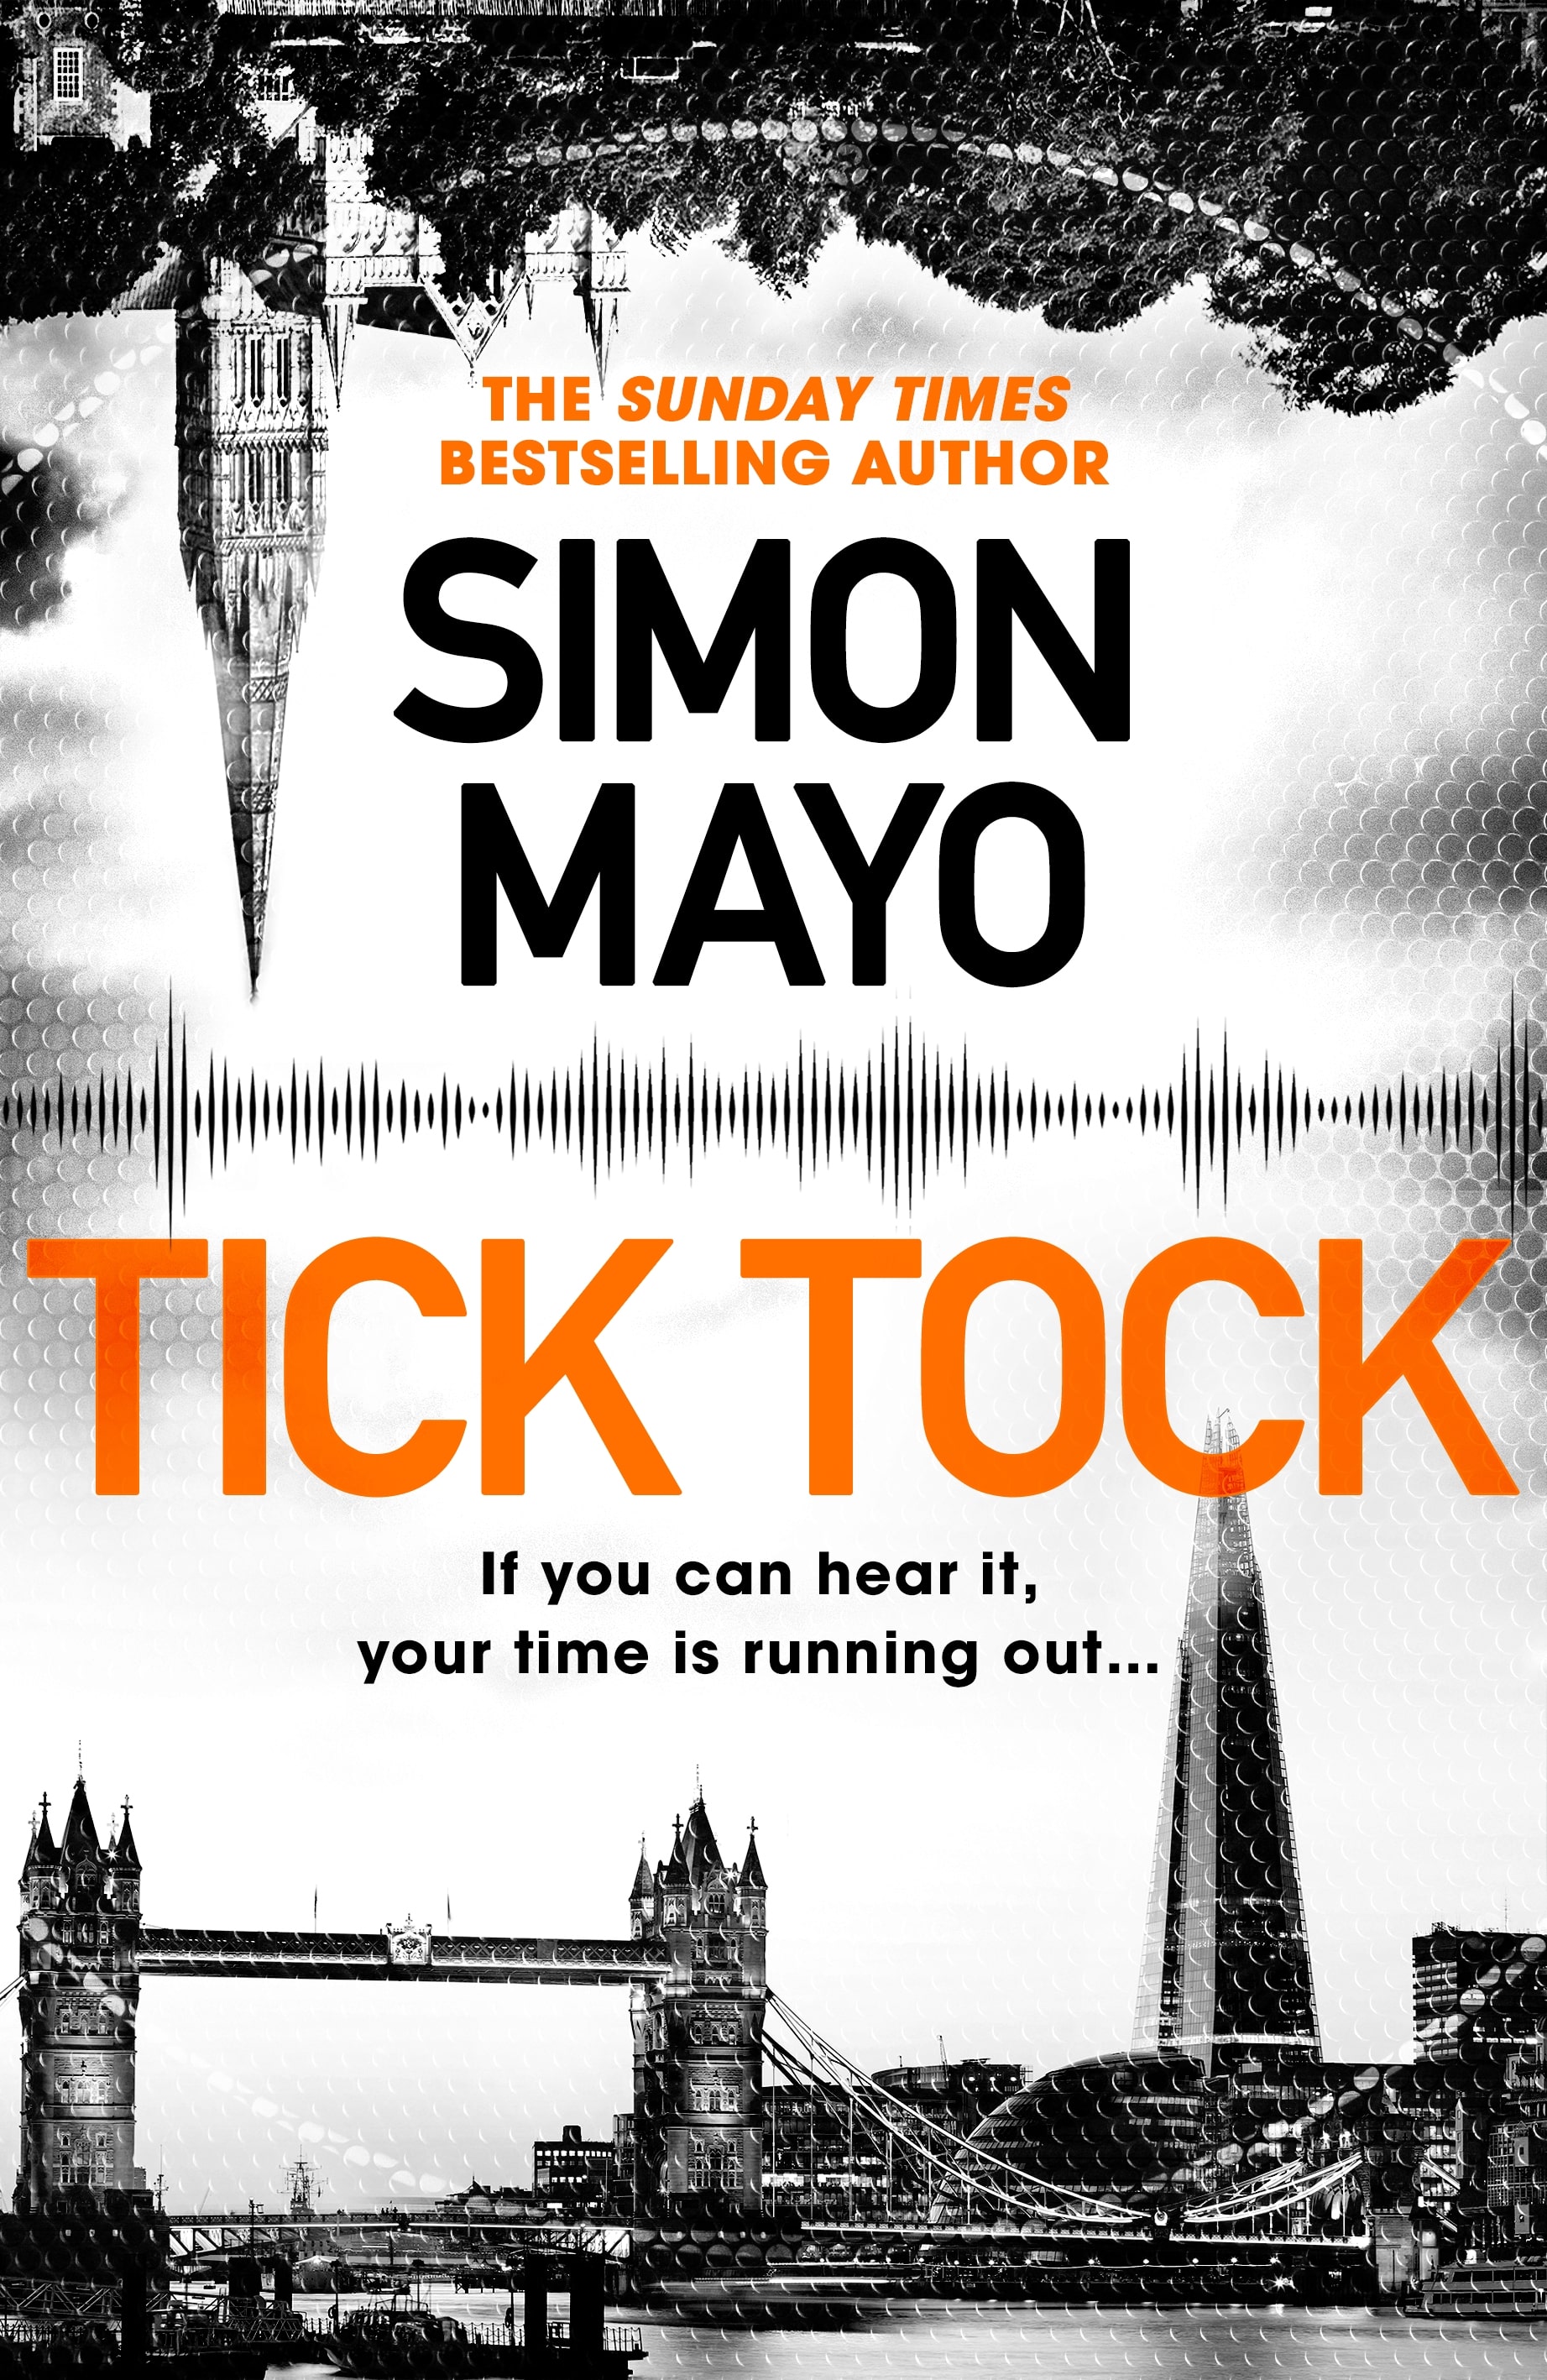 Book jacket of Tick Tock by Simon Mayo